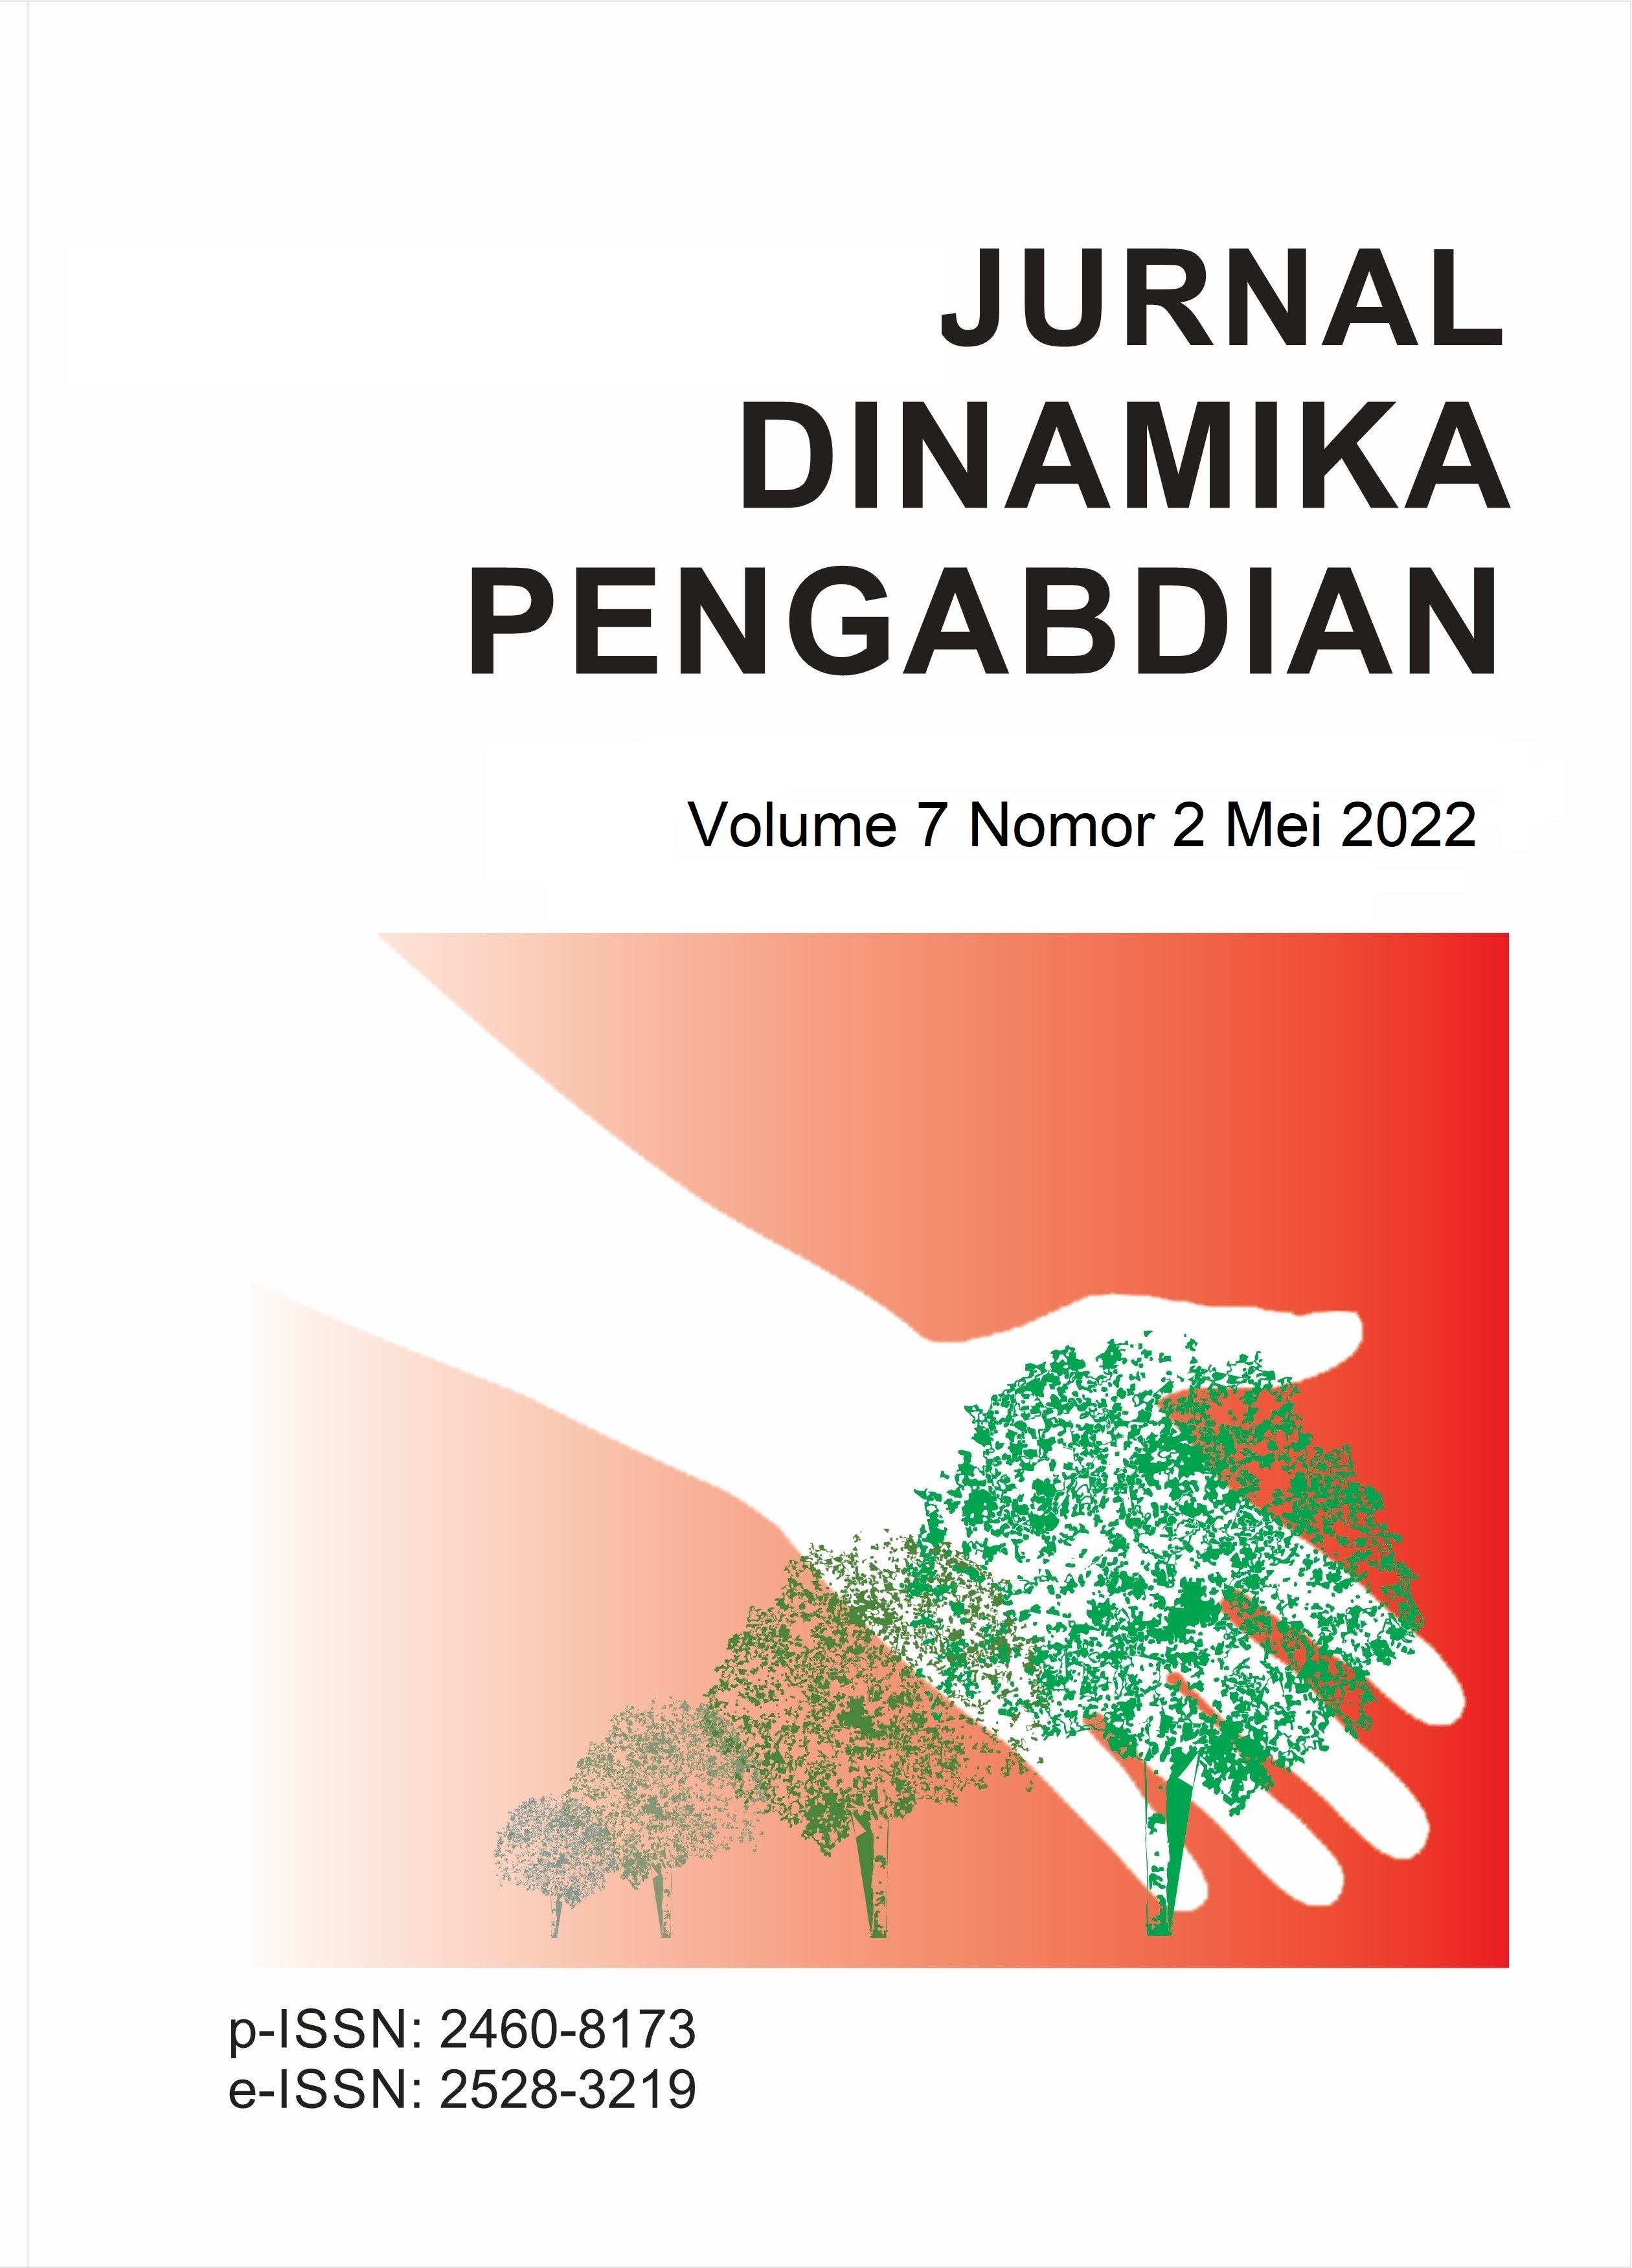 					View Vol. 7 No. 2 (2022): JURNAL DINAMIKA PENGABDIAN VOL. 7 NO. 2 MEI 2022
				